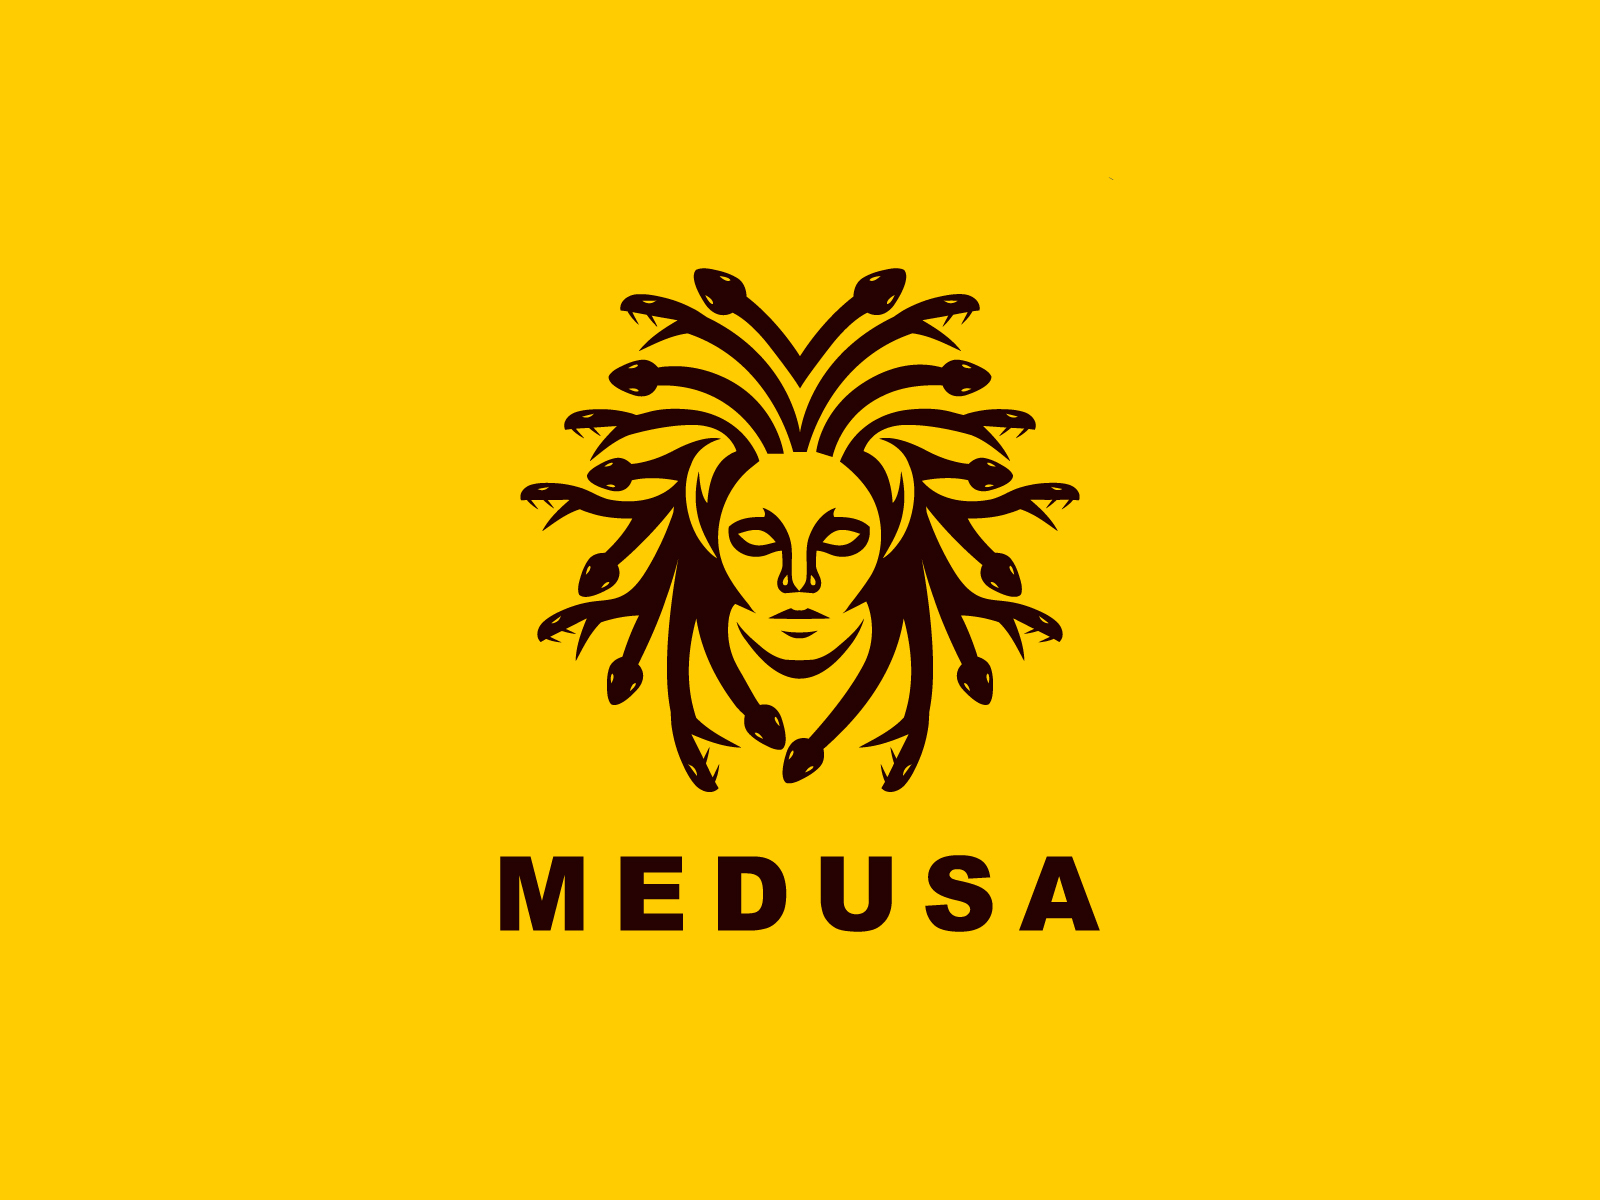 Medusa Logo by Usman on Dribbble